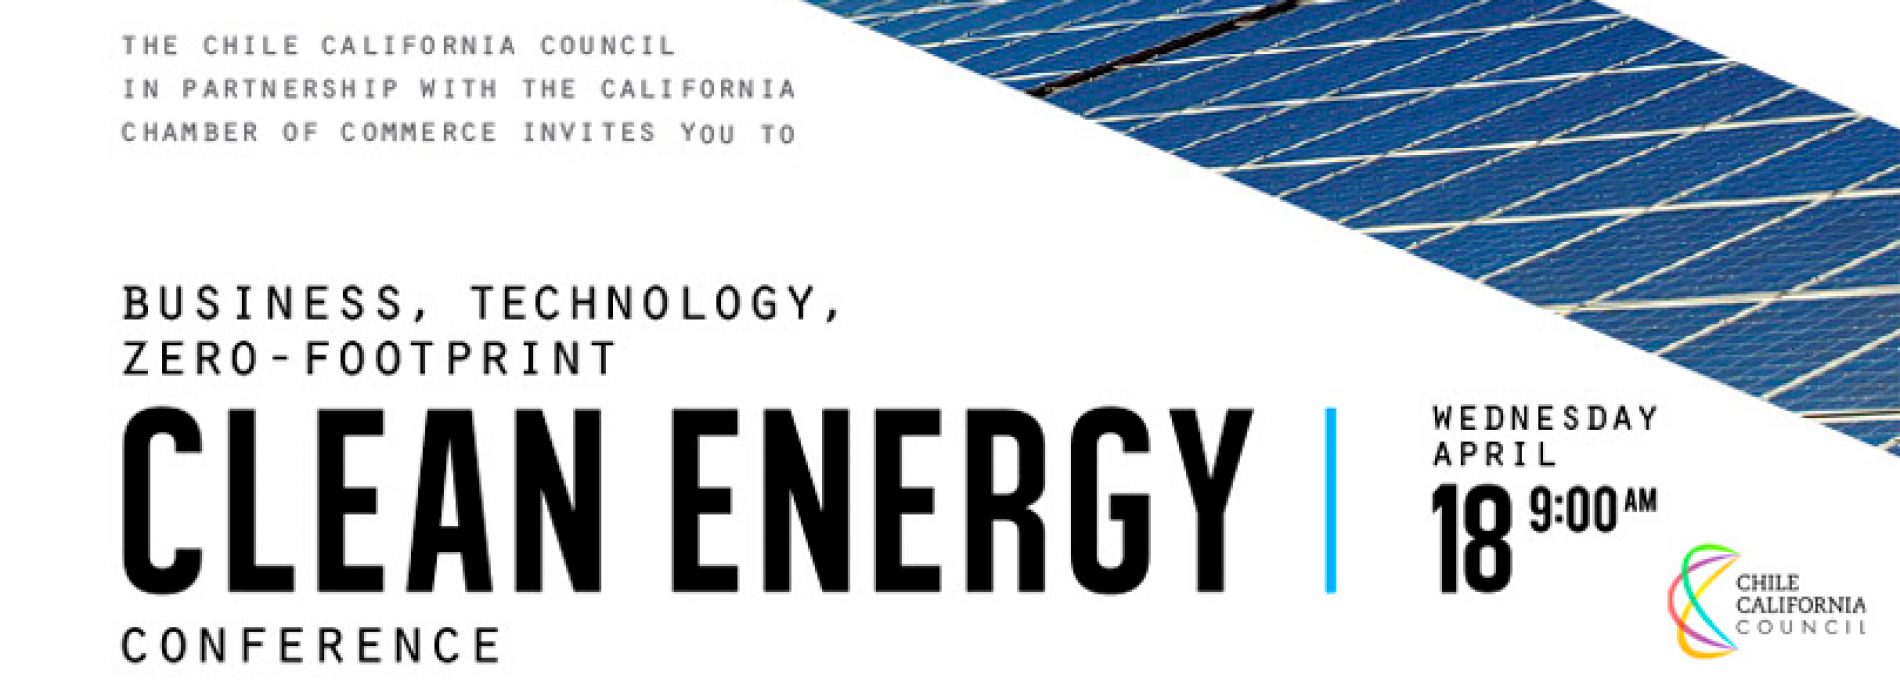 Clean Energy Conference, April 18 – Registration & Program